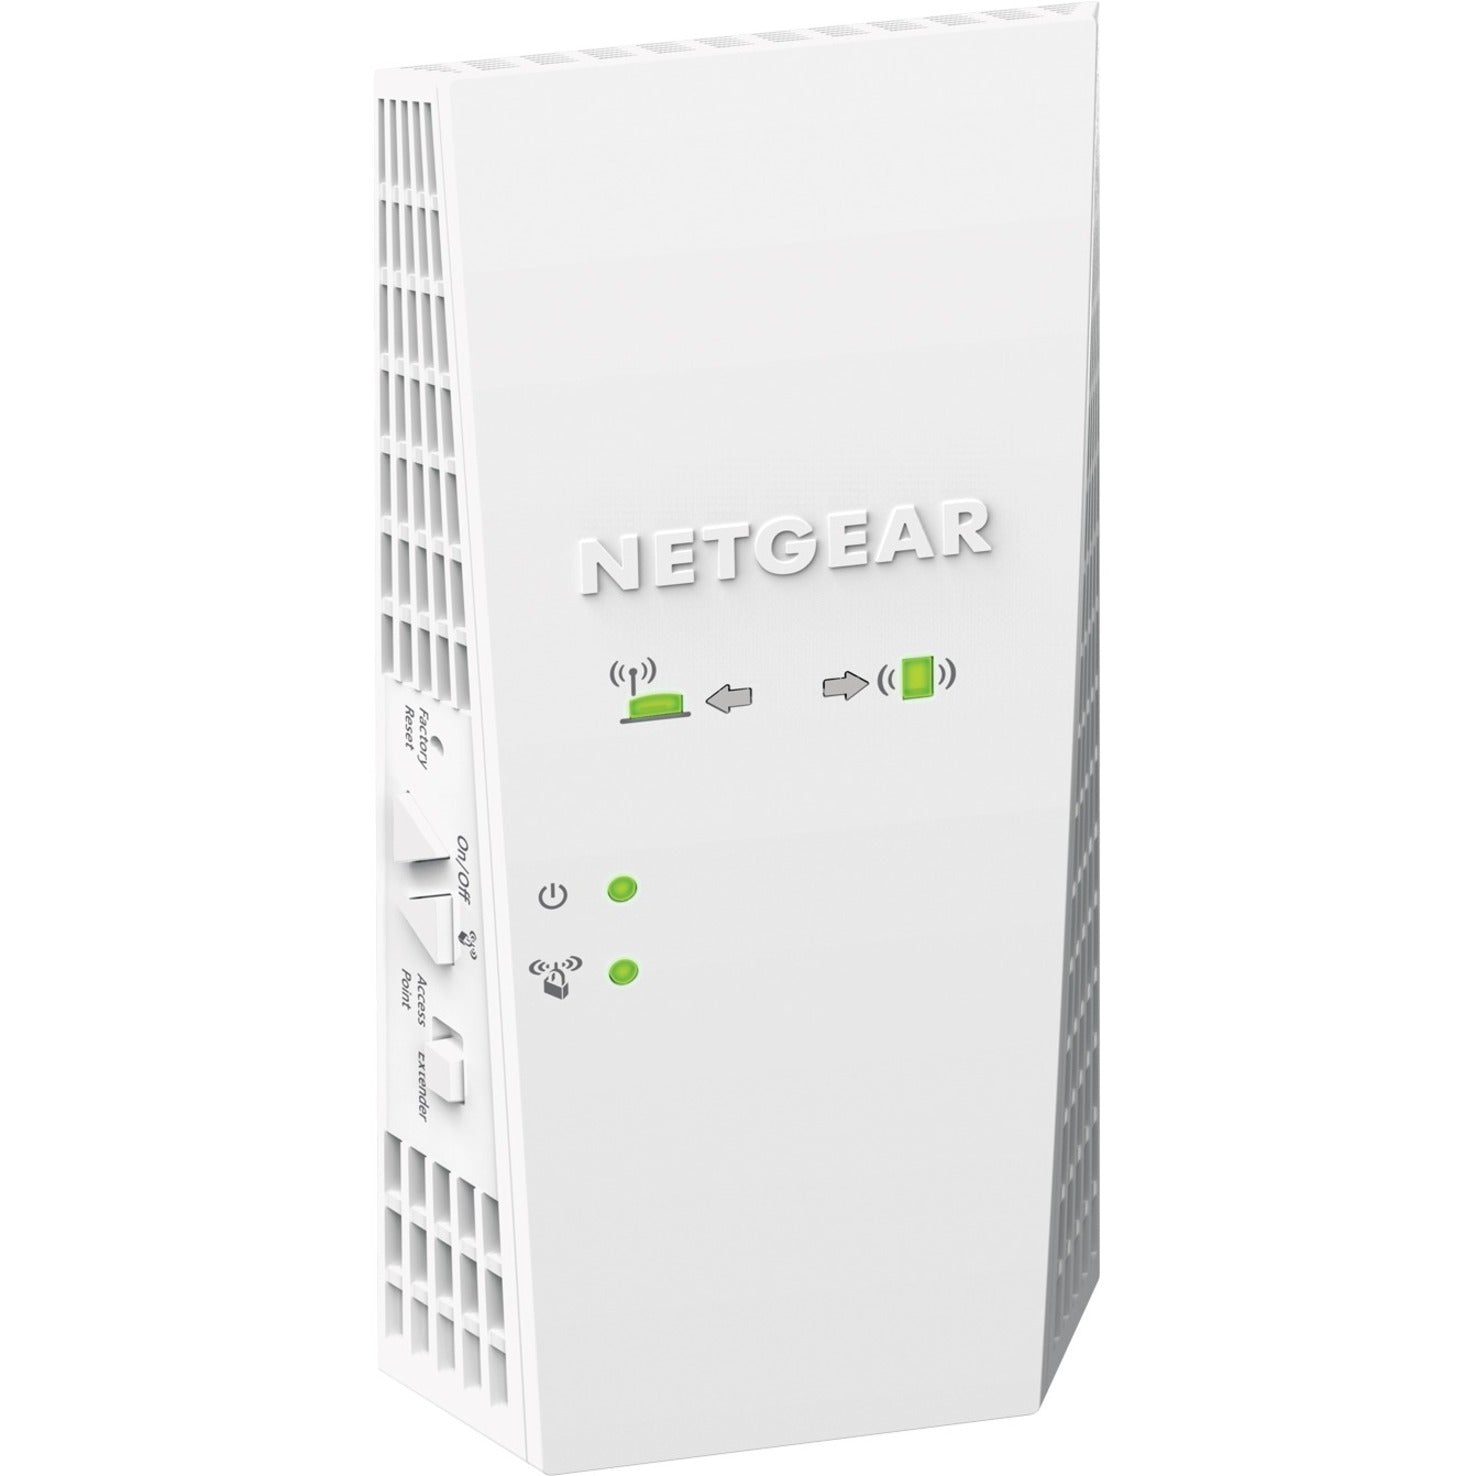 Netgear EX7300-100NAS Nighthawk X4 WiFi Range Extender, Gigabit Ethernet, 2.20 Gbit/s Wireless Transmission Speed